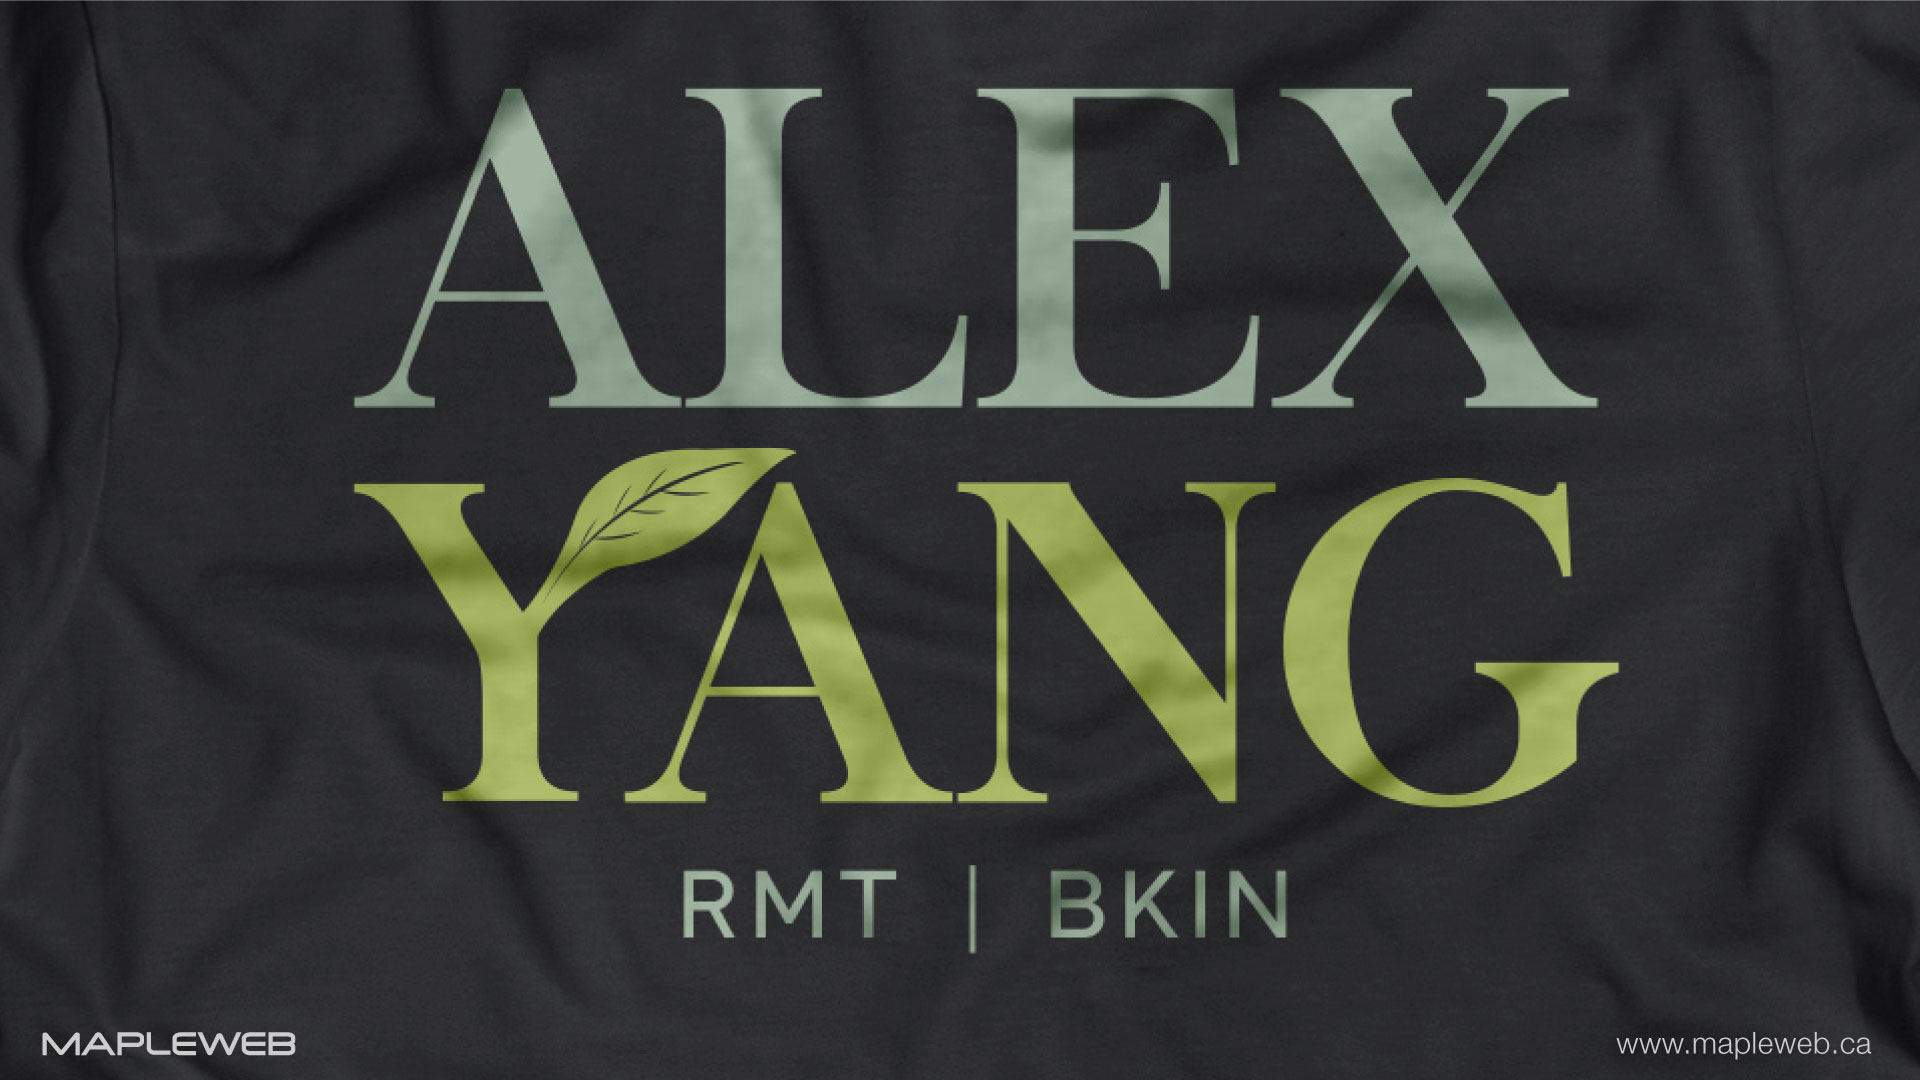 alex-yang-brand-logo-design-by-mapleweb-vancouver-canada-header-t-shirt-mock